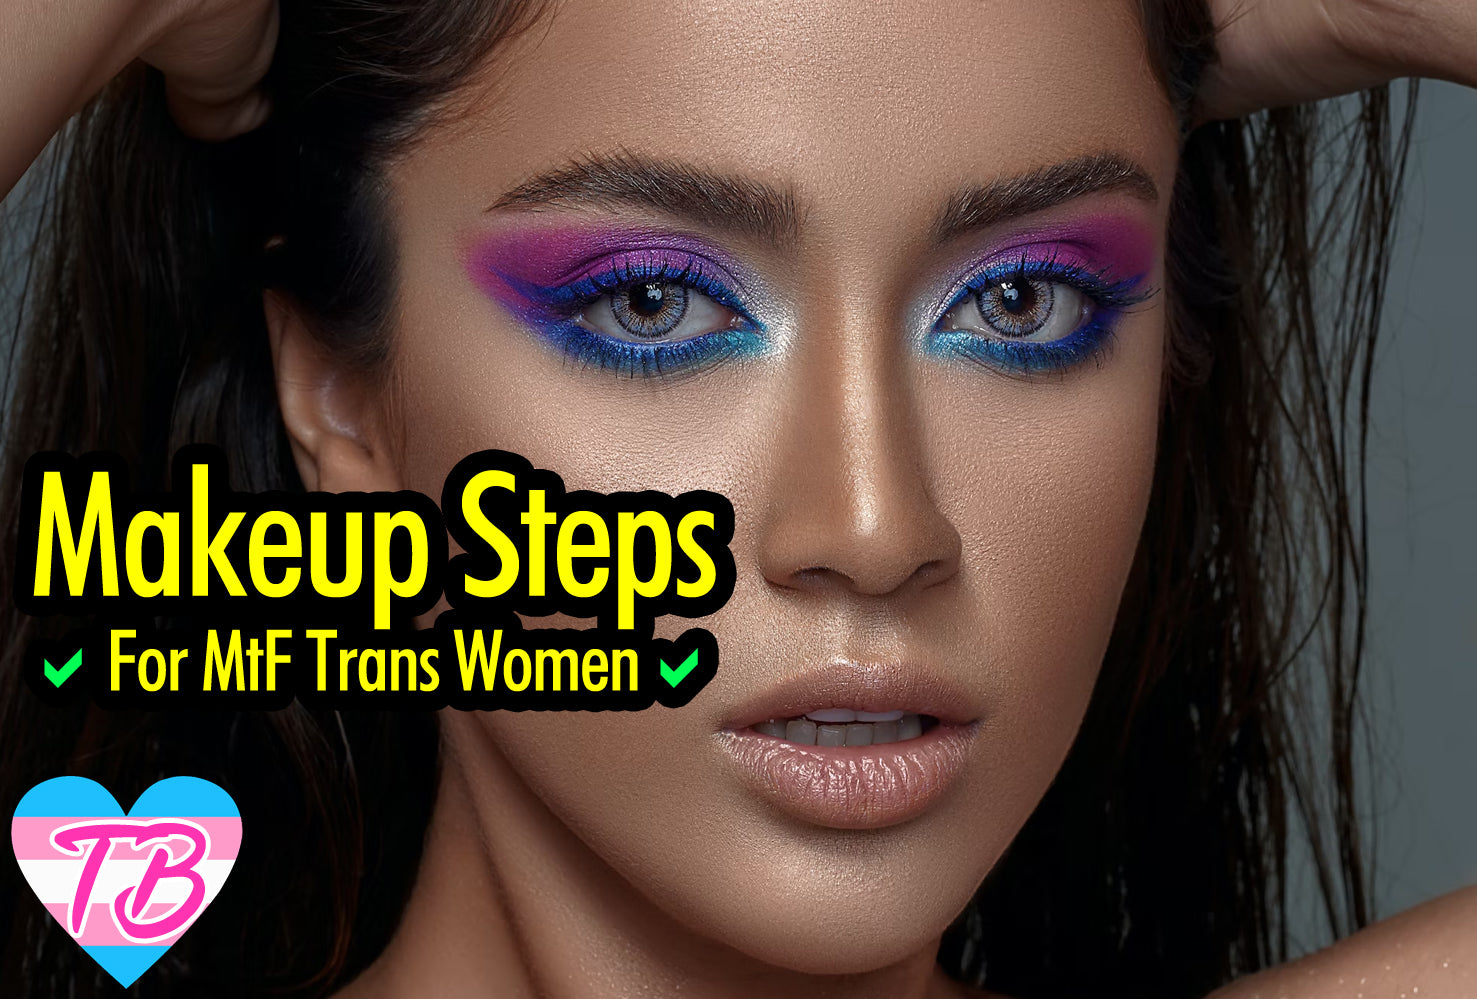 1 MtF Fashion, Style, Beauty & Transition Blog for Transgender